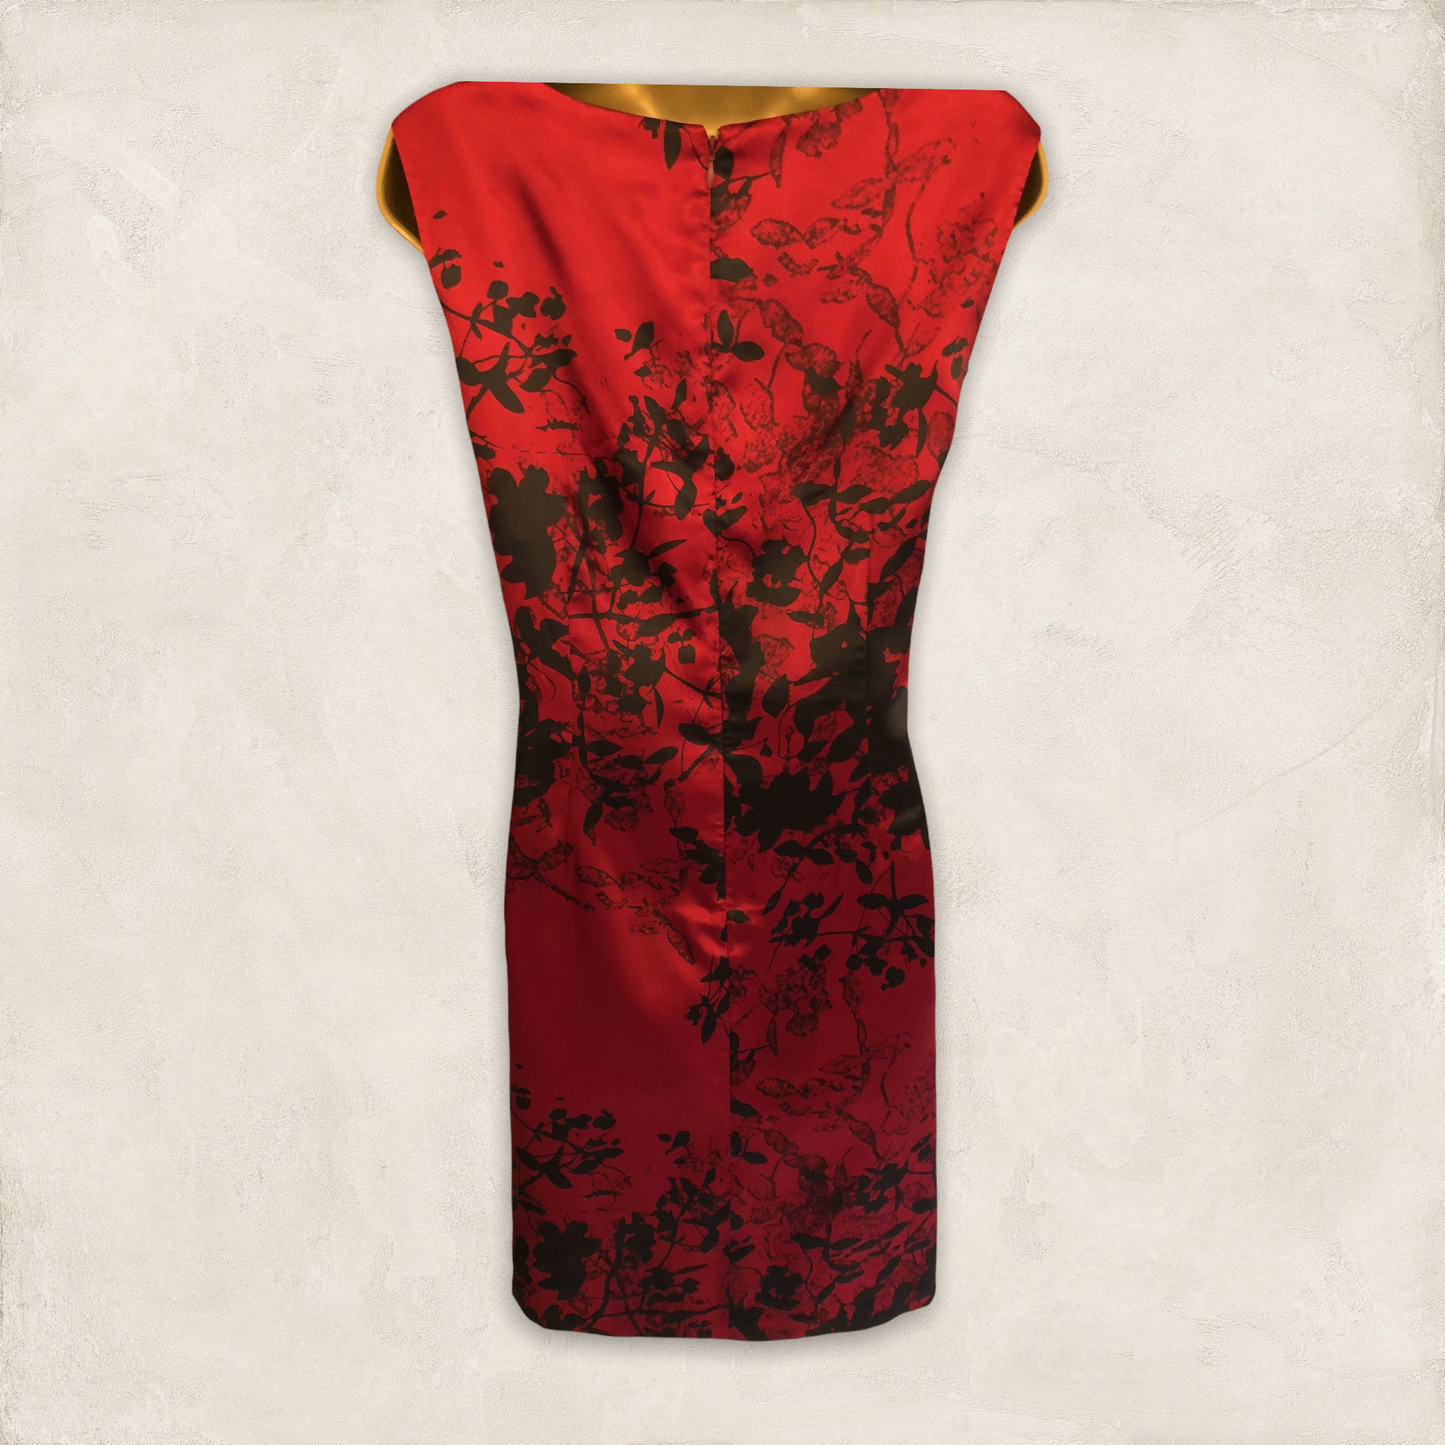 Pomodoro Red & Black Floral Silky Dress UK 16 US 12 EU 44 RRP £79.00 Timeless Fashions